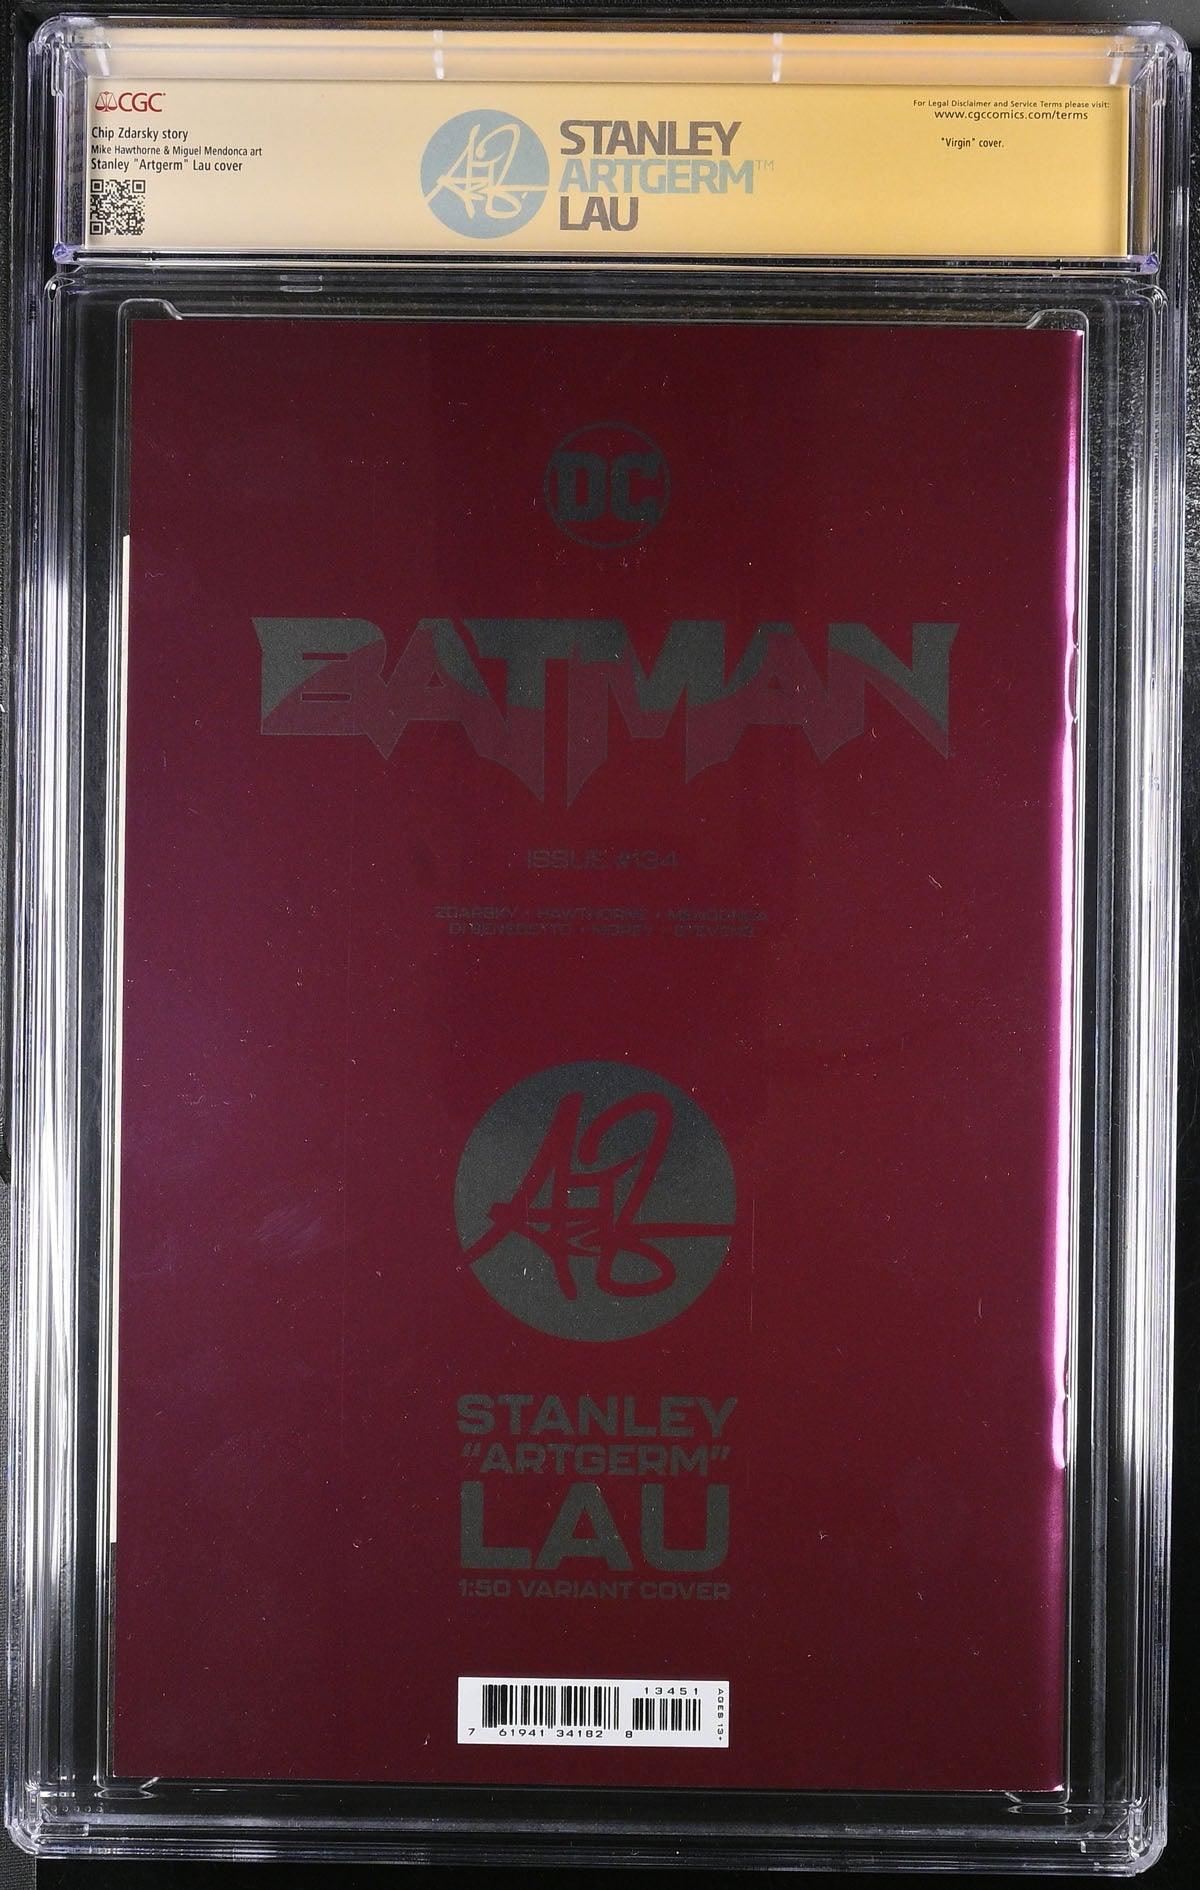 CGC BATMAN VOL 3 #134 1:50 LAU FOIL EDITION B (9.8) SIGNATURE SERIES - SIGNED BY STANLEY "ARTGERM" - Kings Comics